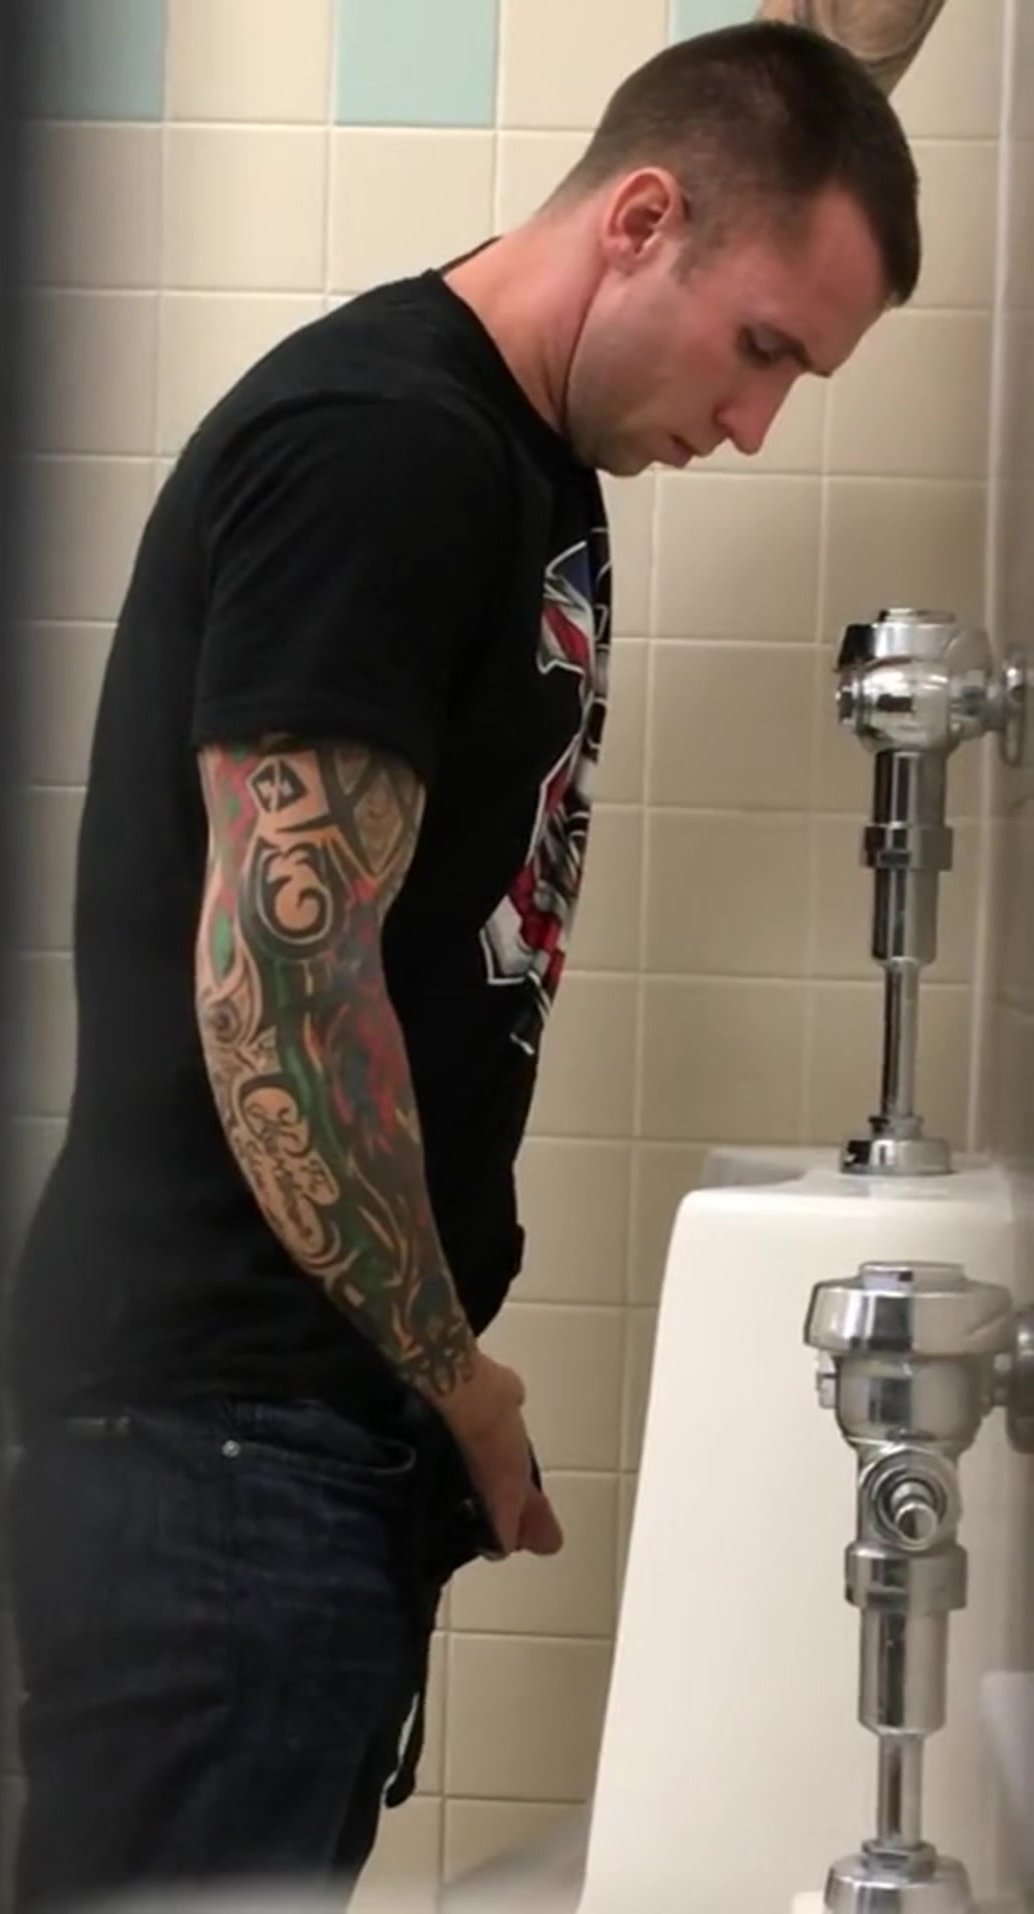 Hot pissing urinal tattoo lad